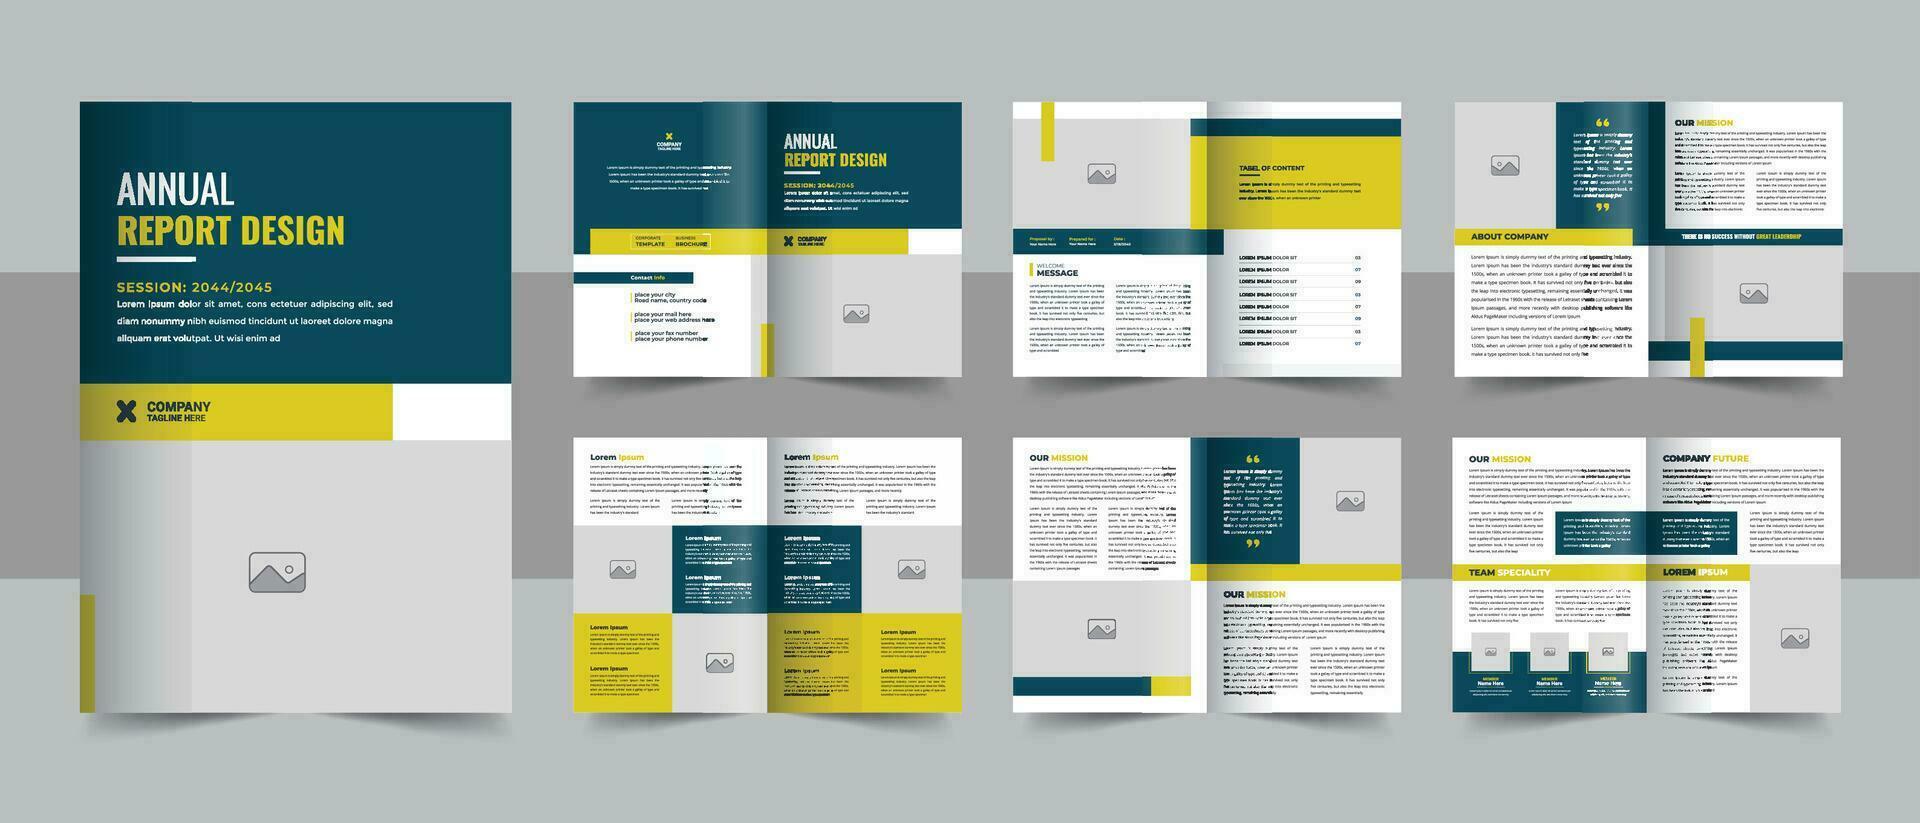 empresa perfil folleto anual reporte folleto negocio propuesta diseño concepto vector